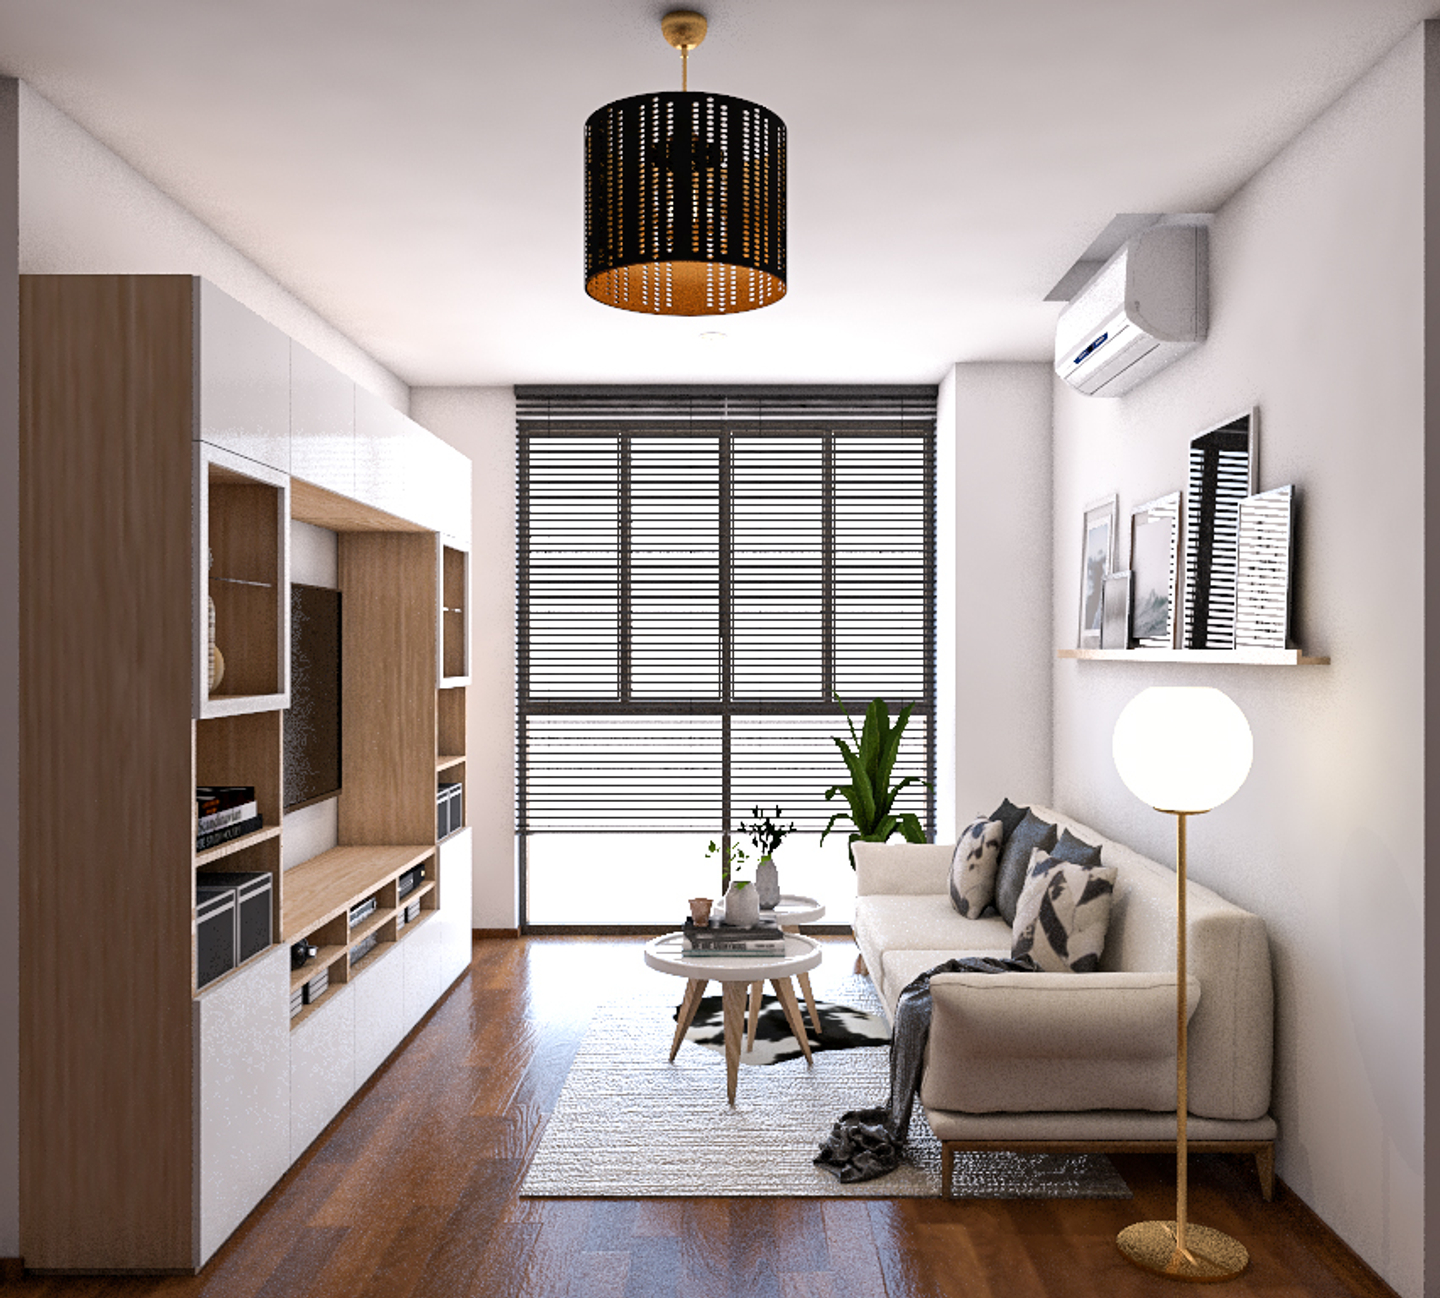 Industrial Living Room with Chandelier - Livspace